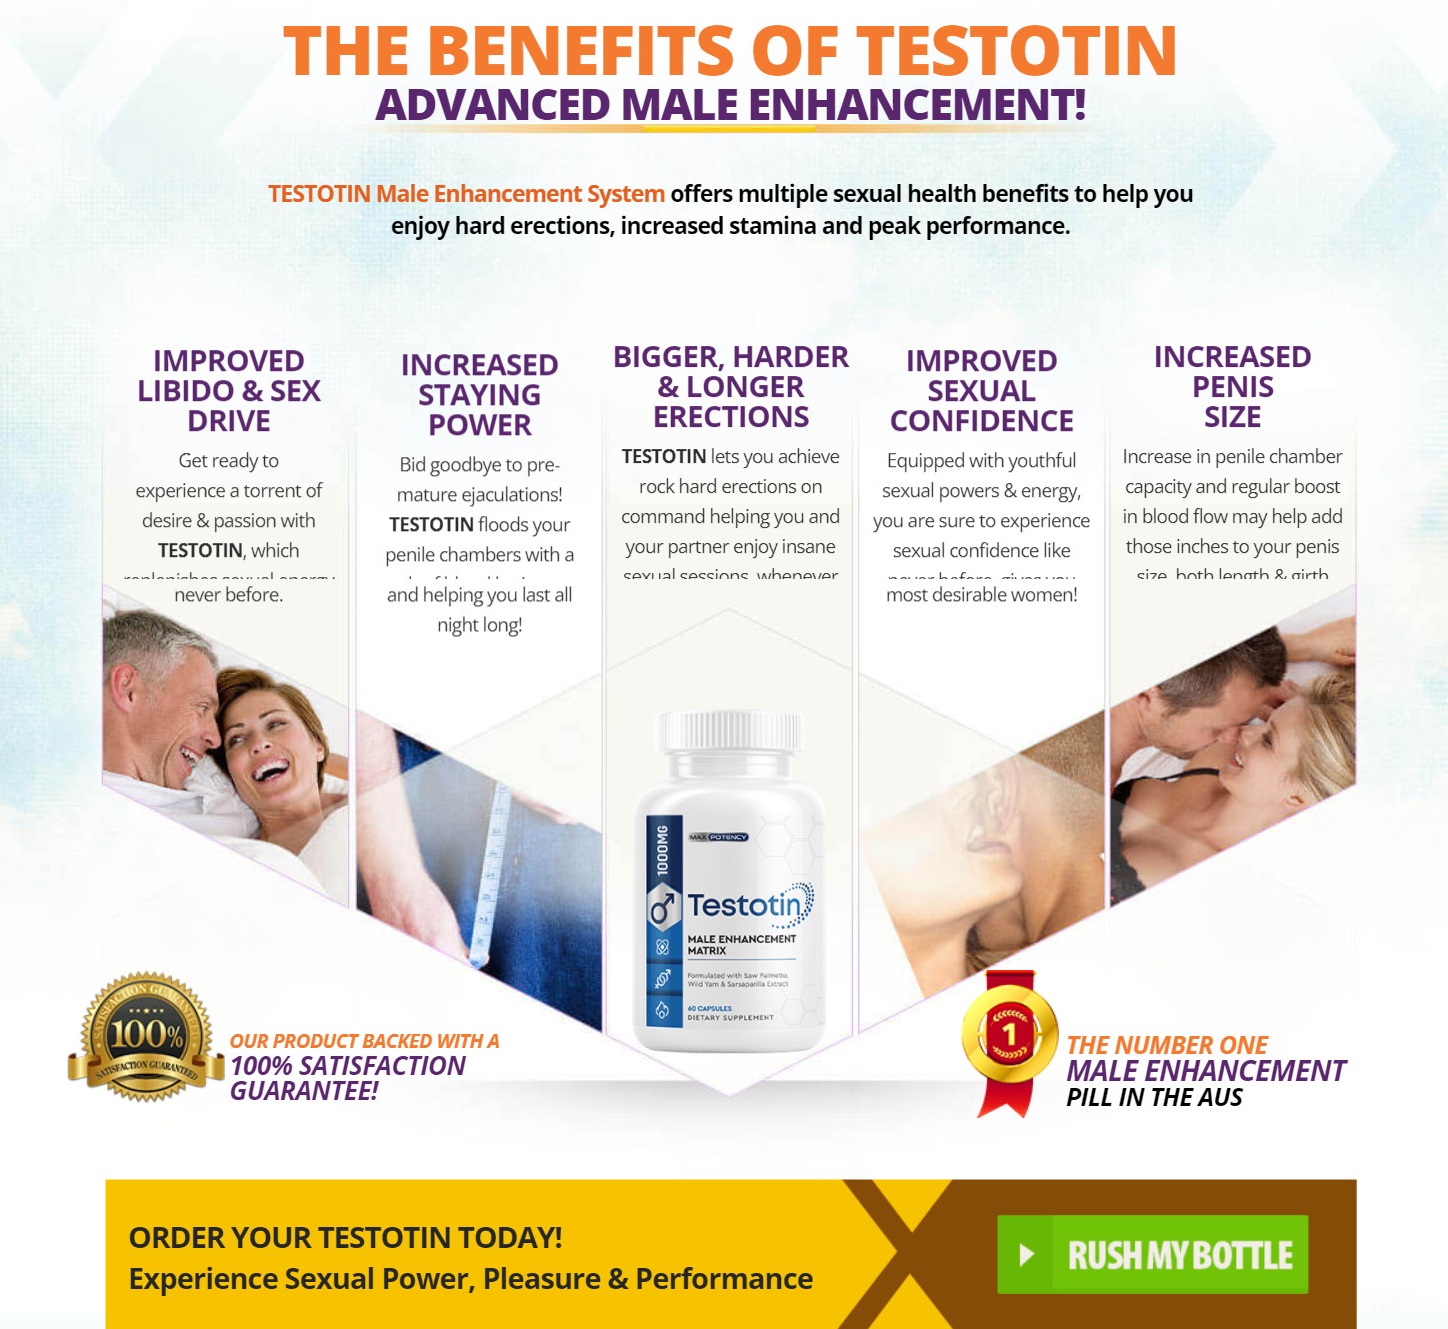 Testotin Male Enhancement Benefits